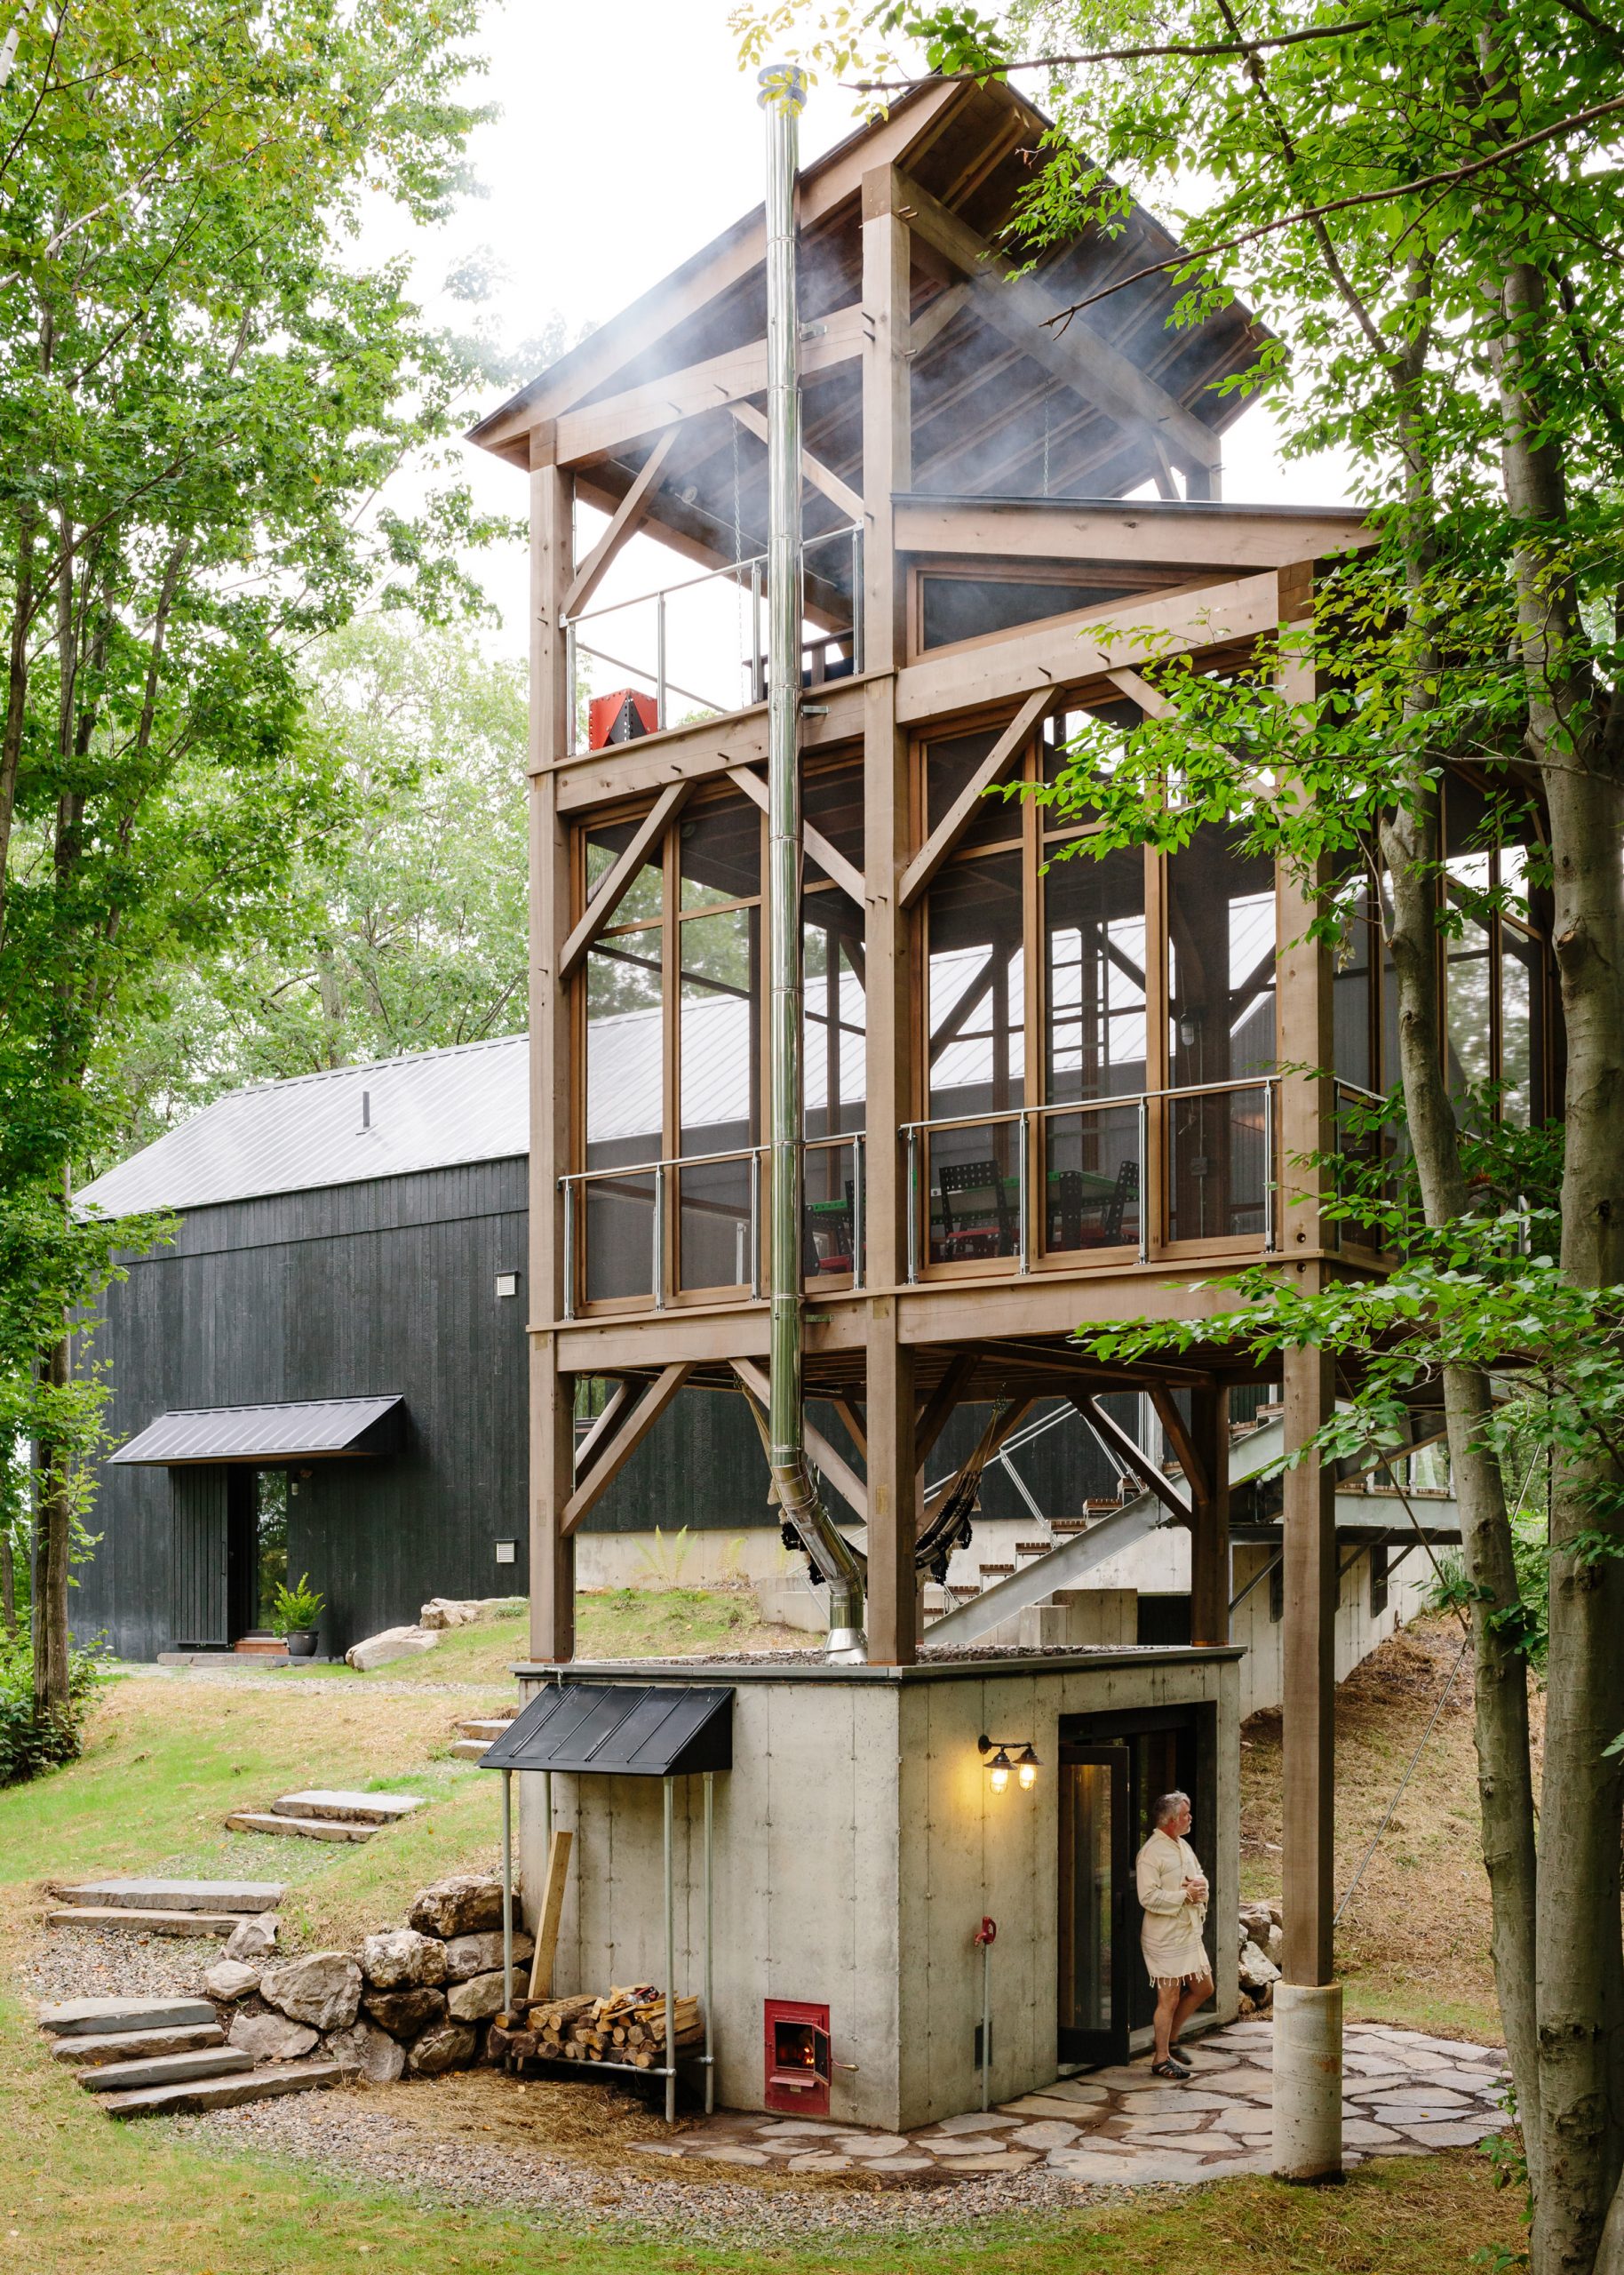 A three-storey outdoor sauna